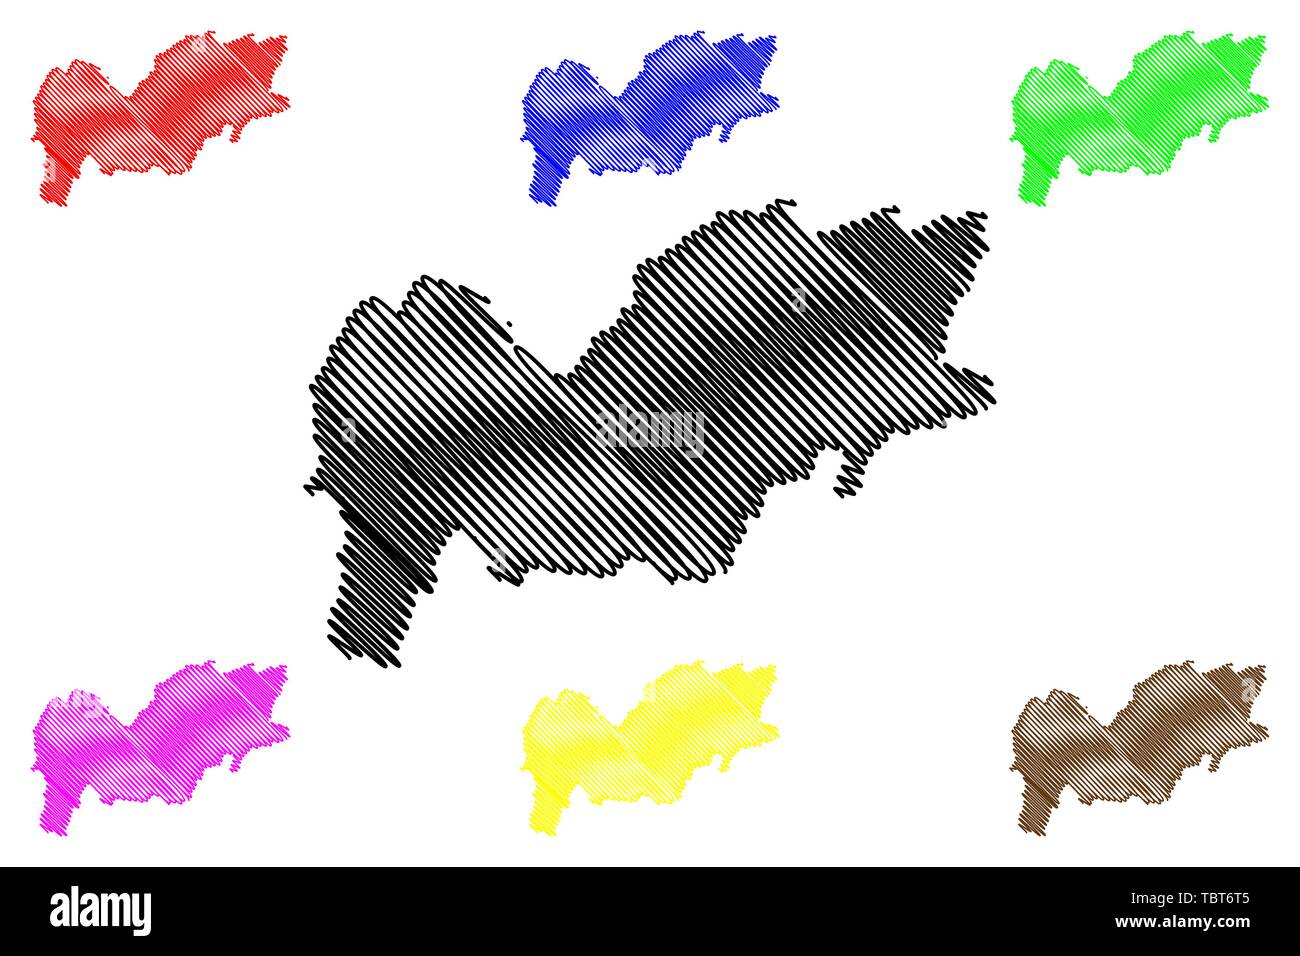 Urozgan Provinz (Islamische Republik Afghanistan, Provinzen Afghanistans) Karte Vektor-illustration, kritzeln Skizze Uruzgan oder Oruzgan Karte Stock Vektor